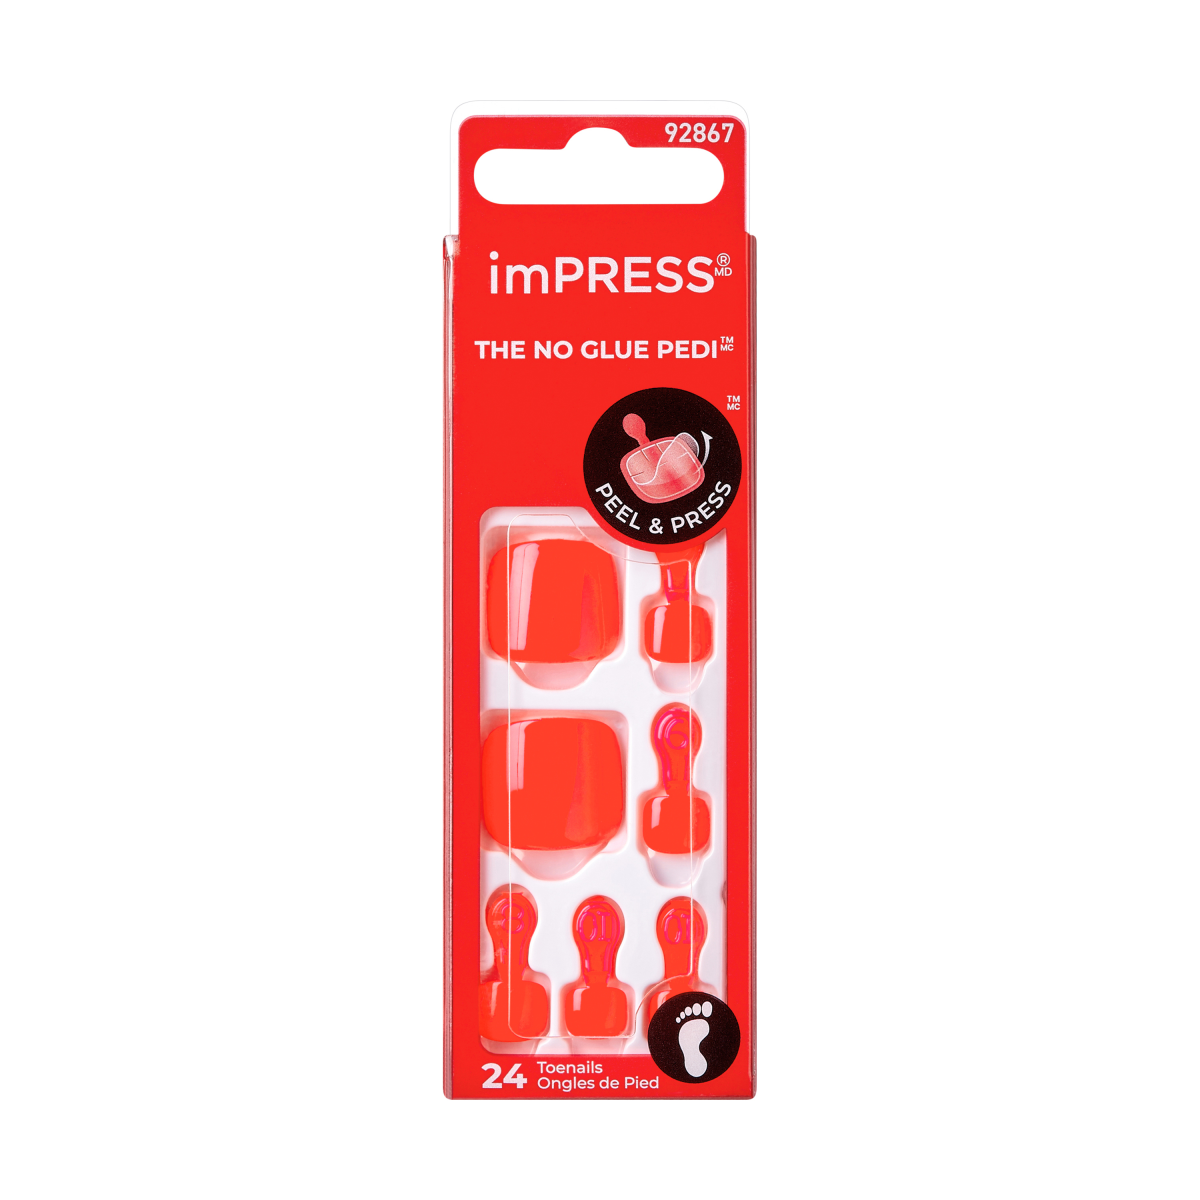 imPRESS Press-on-Pedicure – Popular